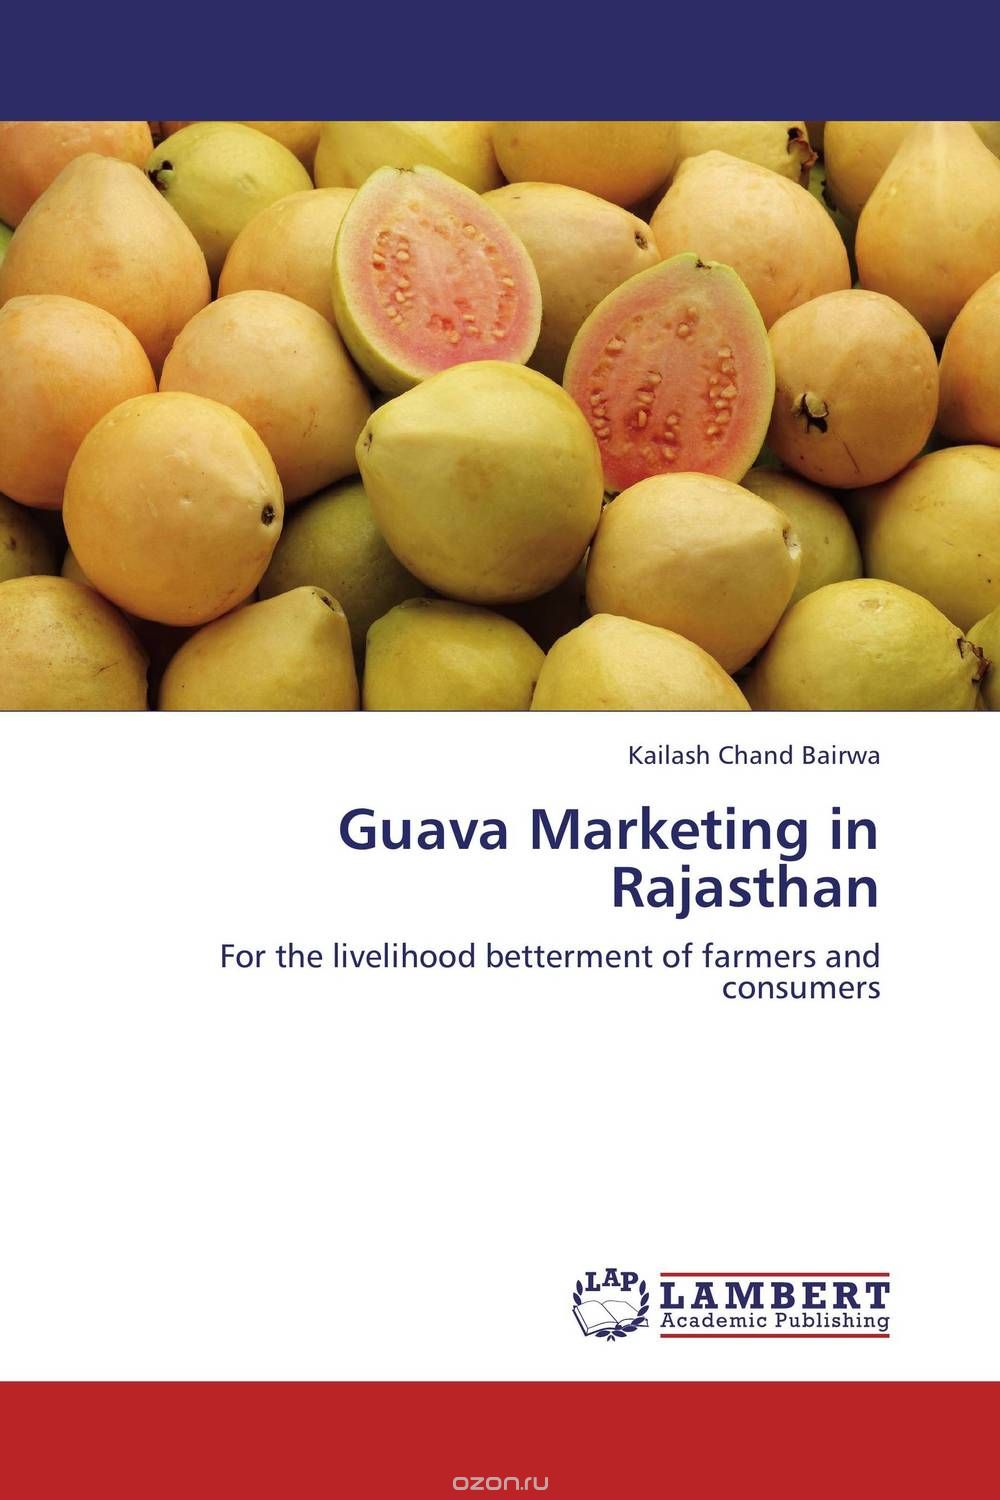 Скачать книгу "Guava Marketing in Rajasthan"